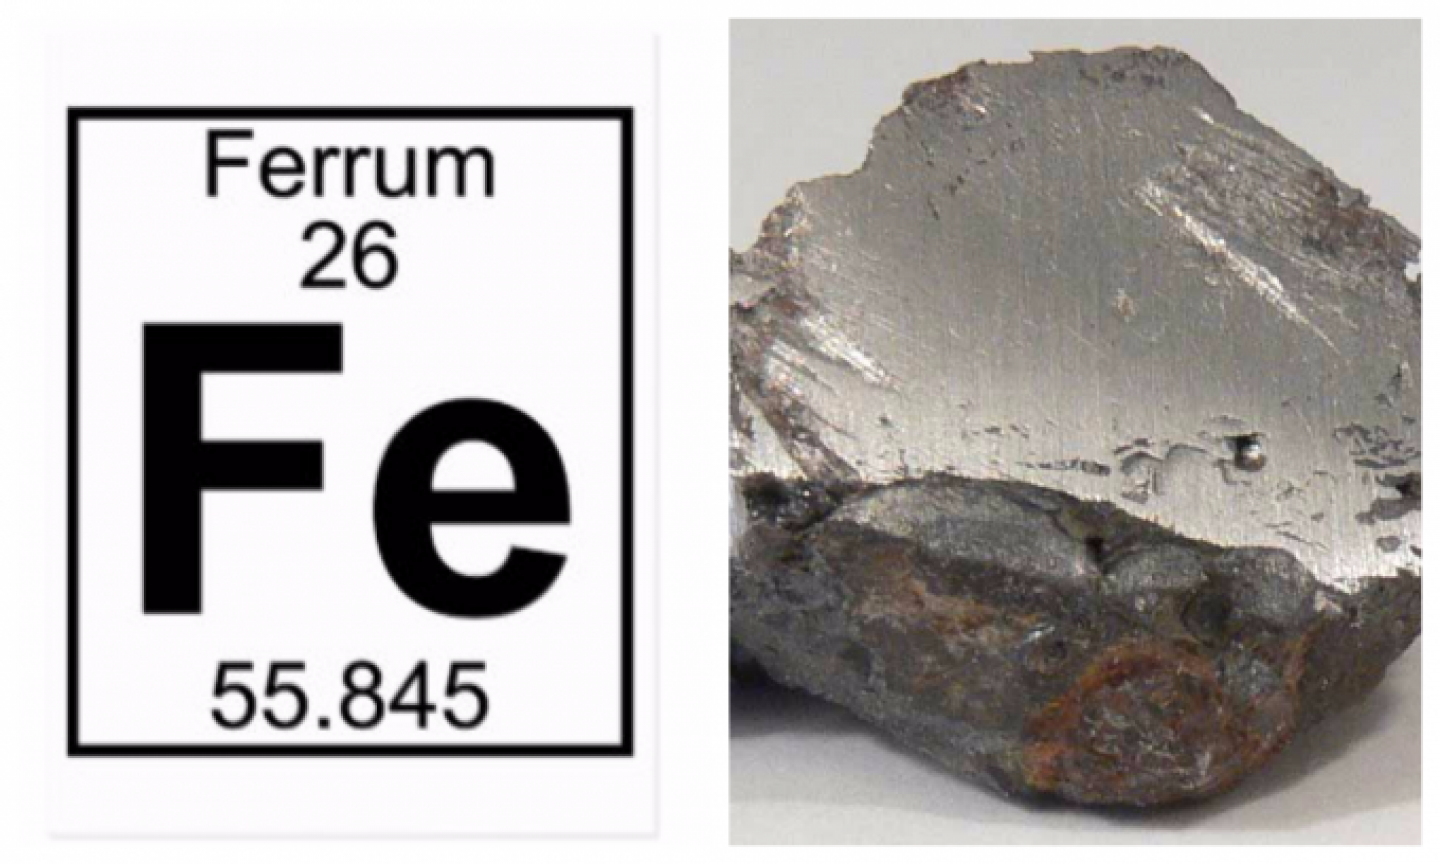 Fe номер элемента. Феррум химический элемент. Железо Феррум химия таблица Менделеева. Химический элемент железо Феррум. Железо Fe таблица Менделеева.